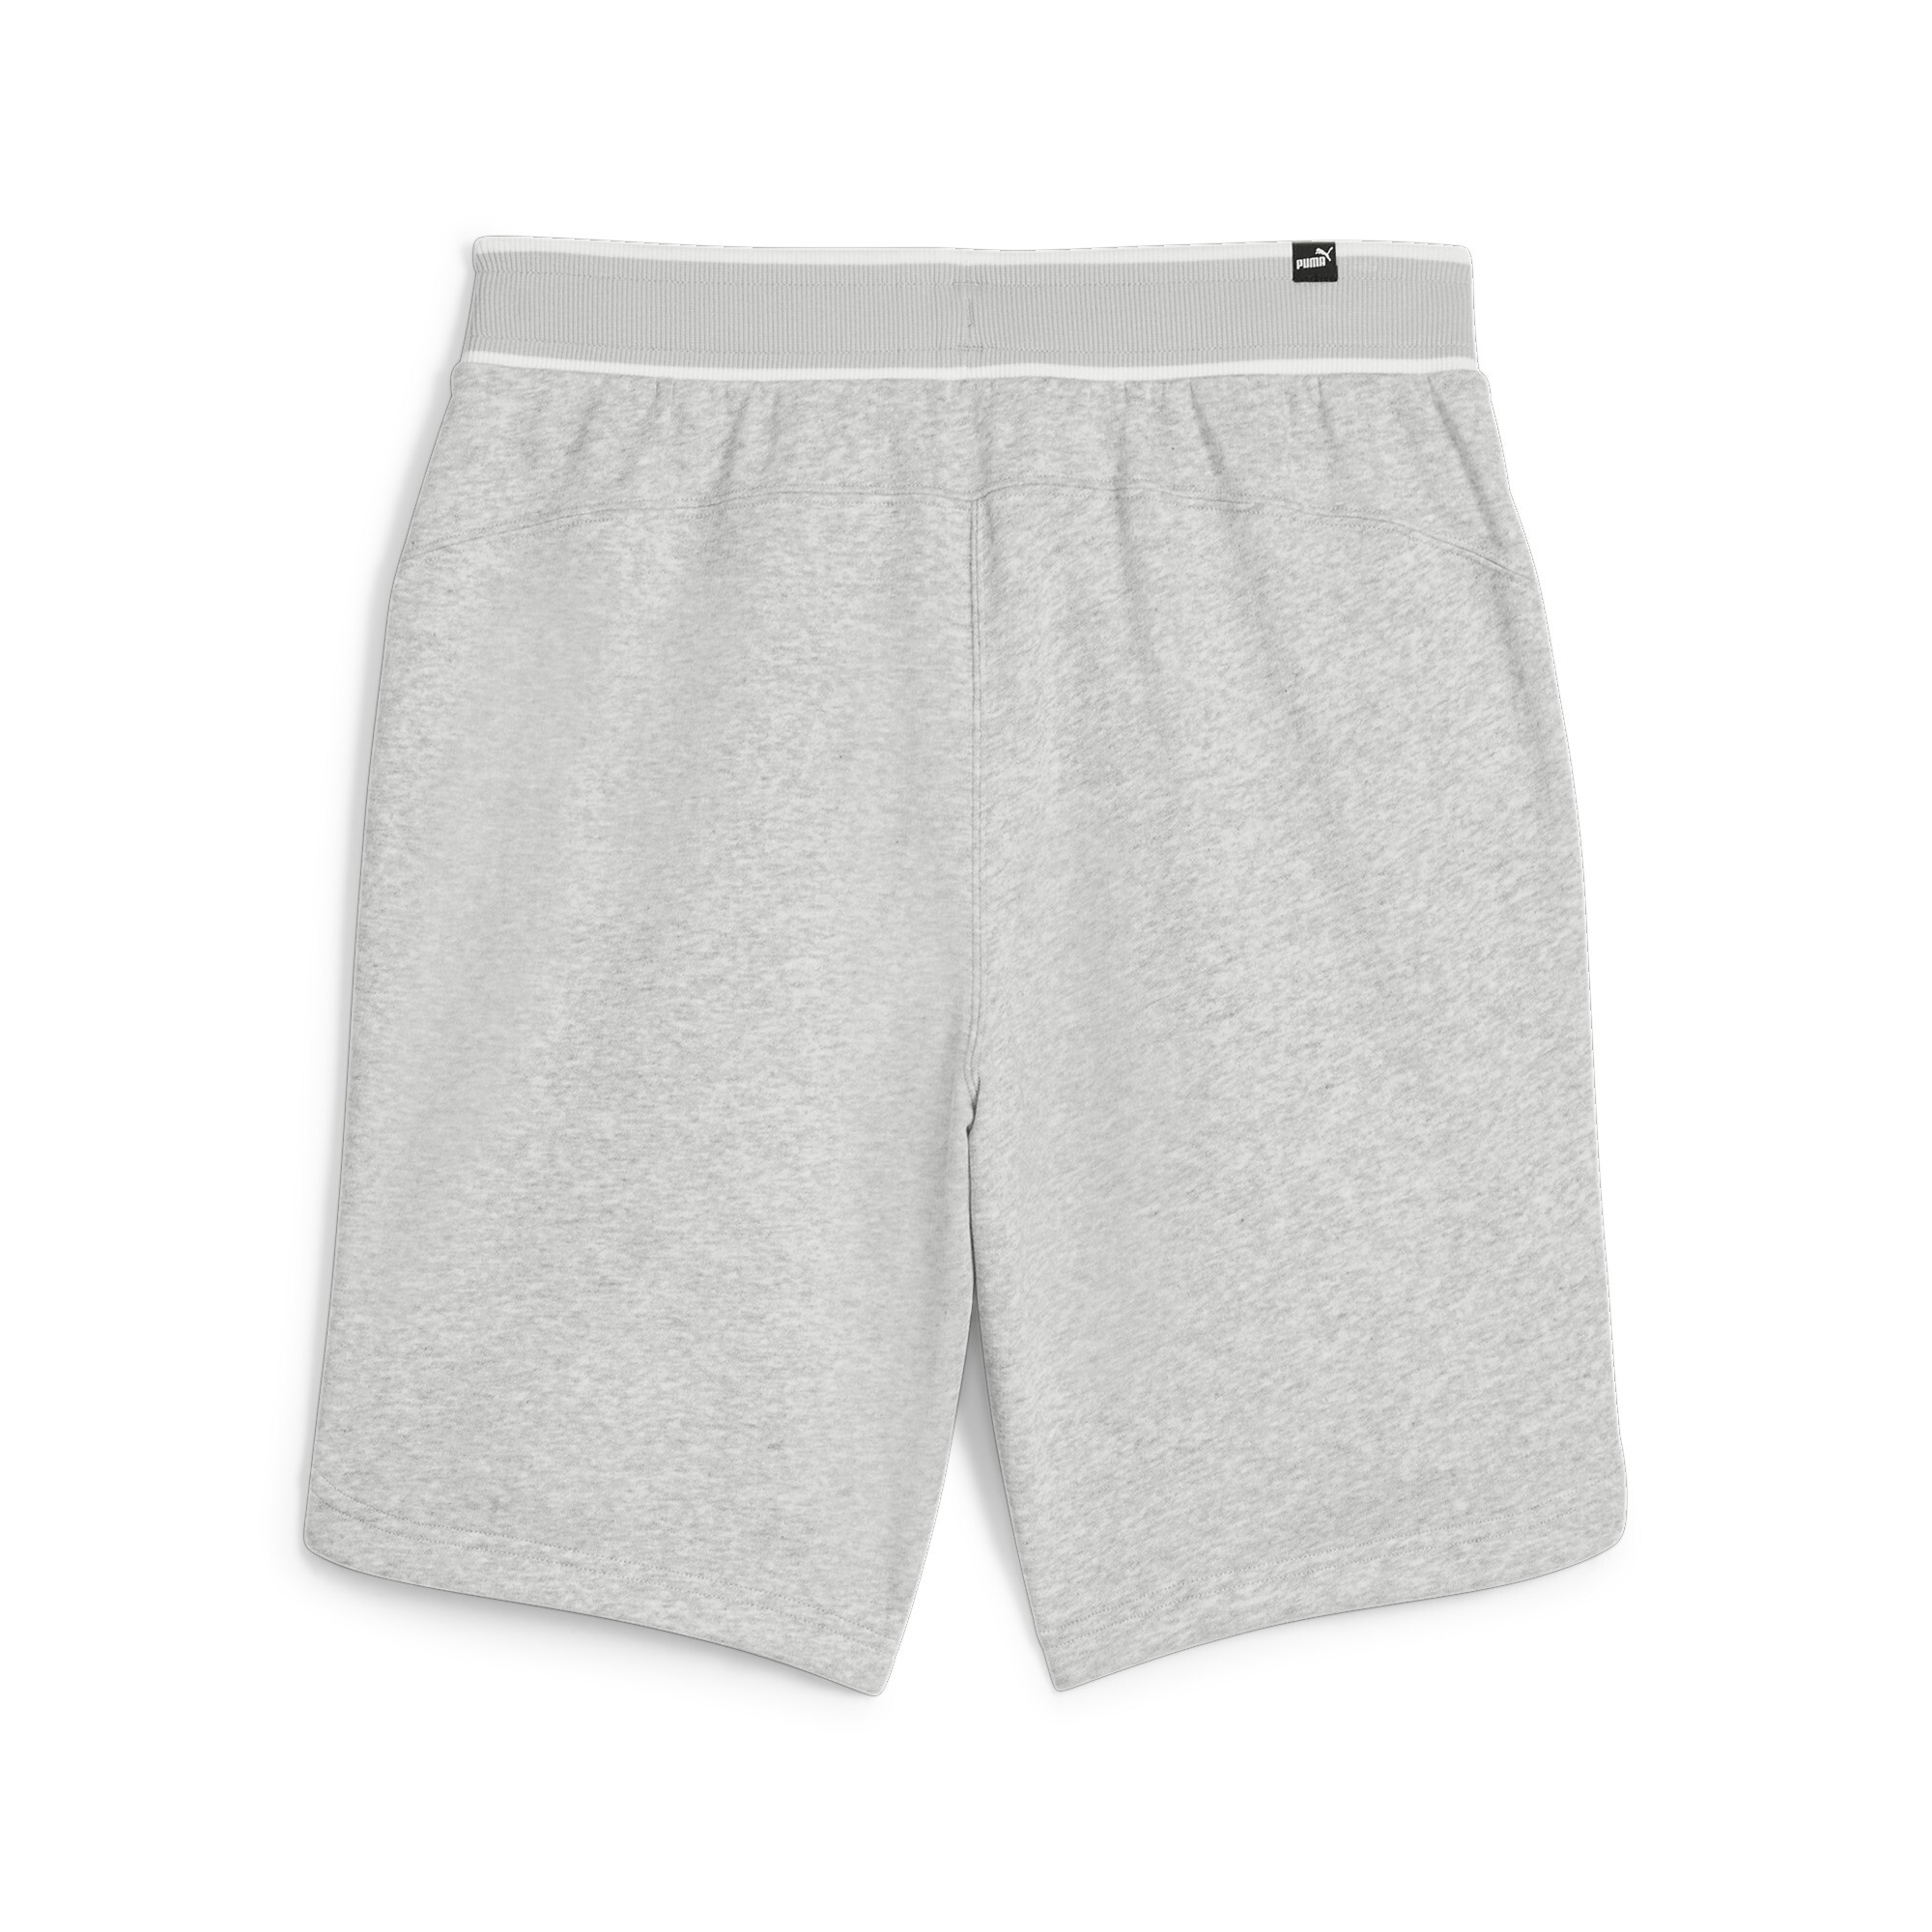 Men's Puma SQUAD Shorts, Gray, Size S, Clothing